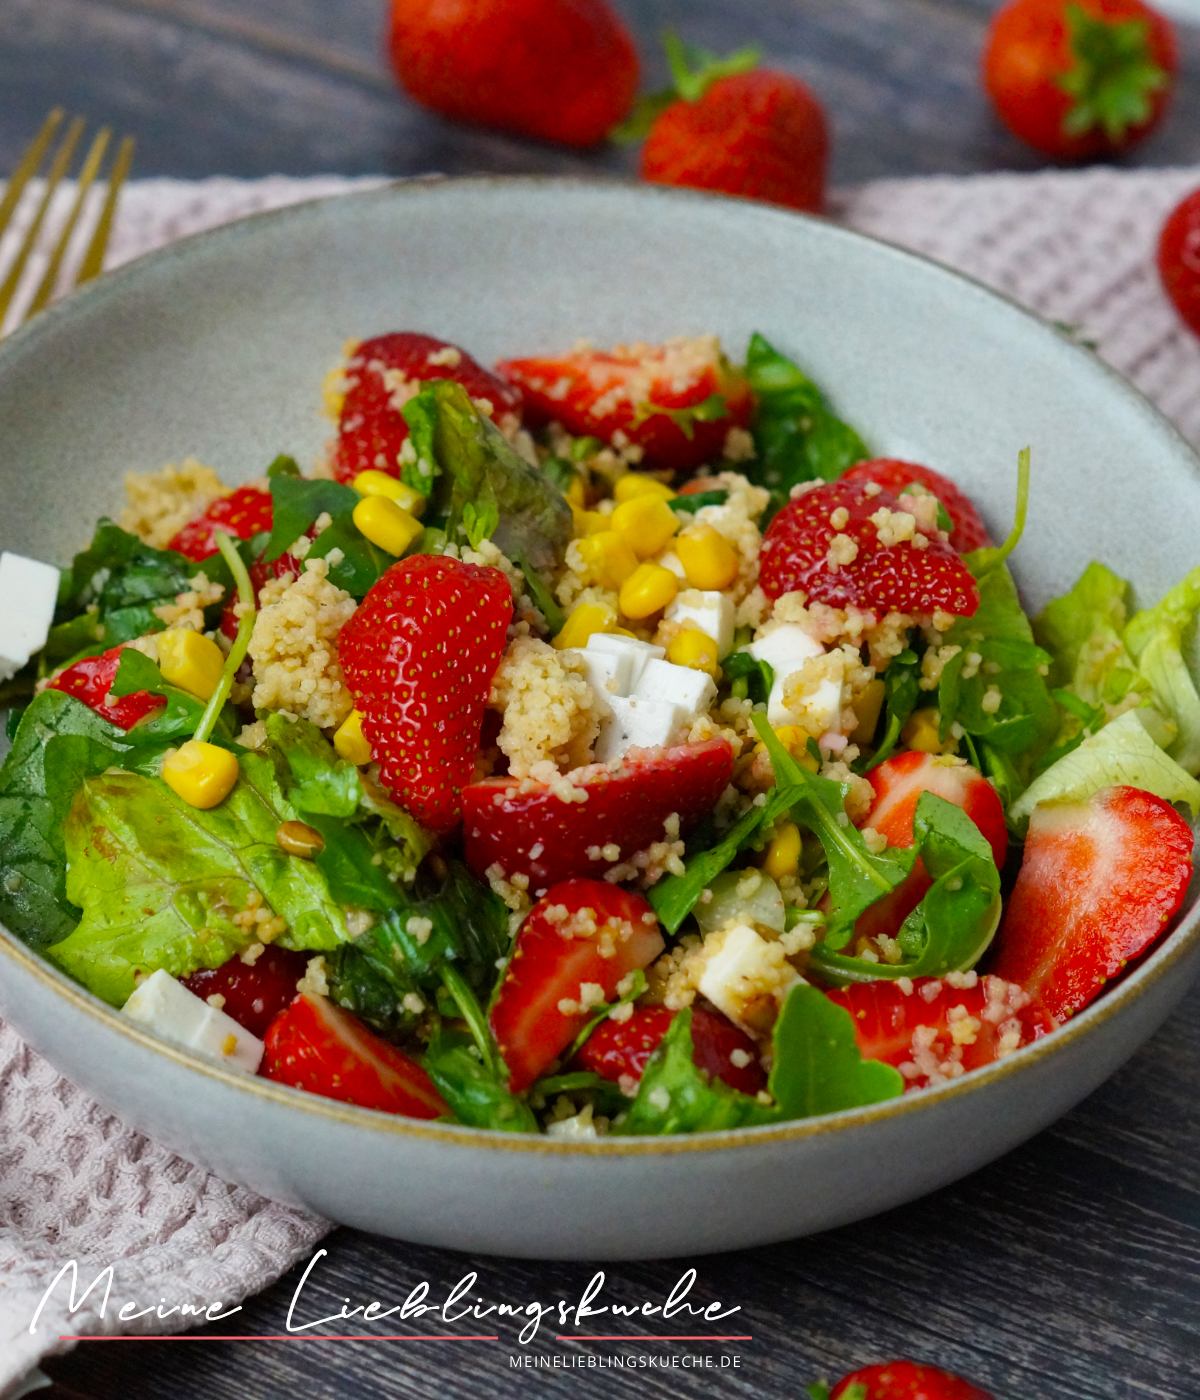 Couscous-Salat mir Erdbeeren und Feta